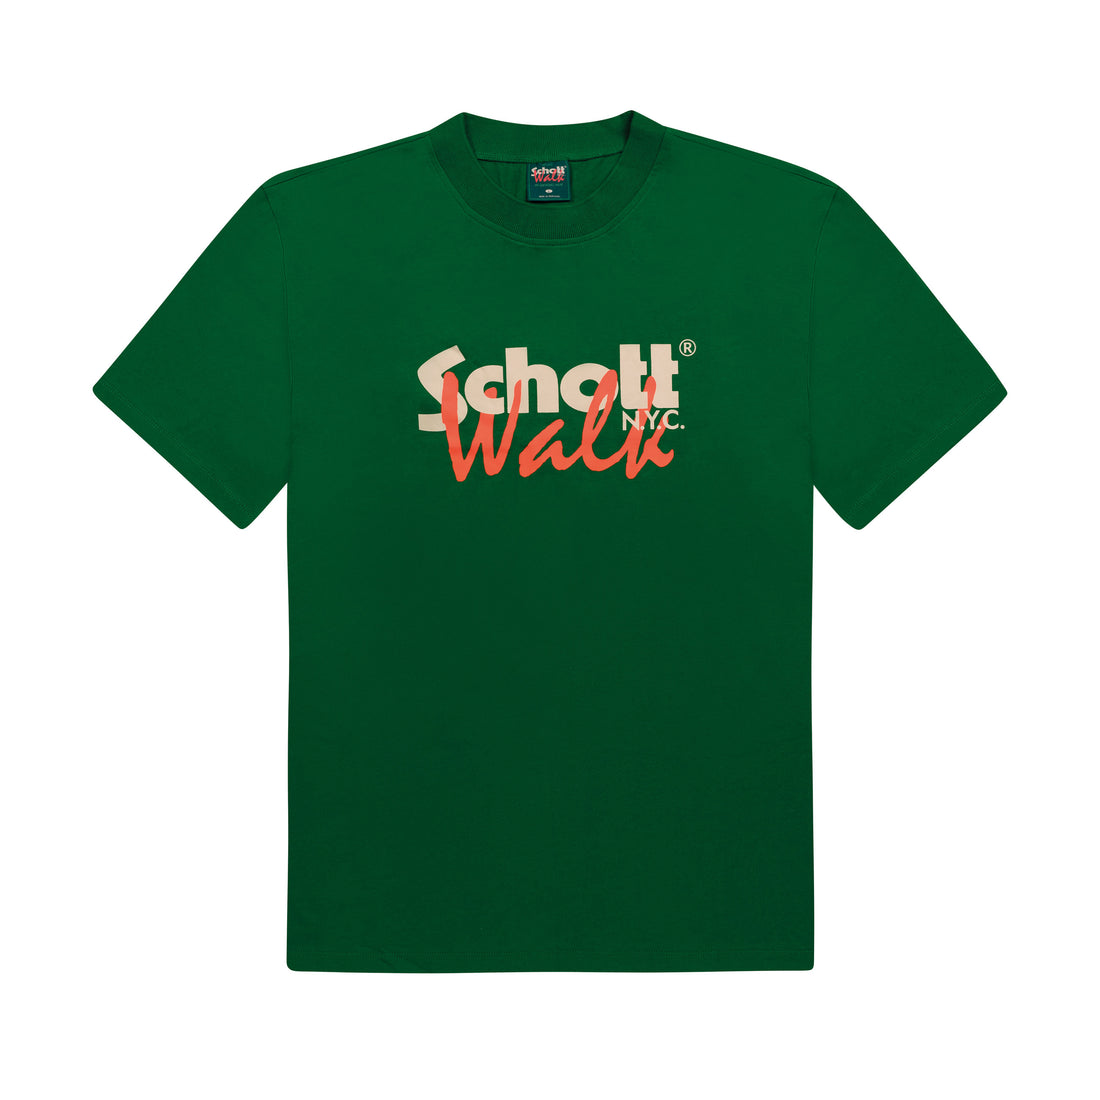 Walk in Paris x Schott NYC - The green "Paris New York" T-shirt